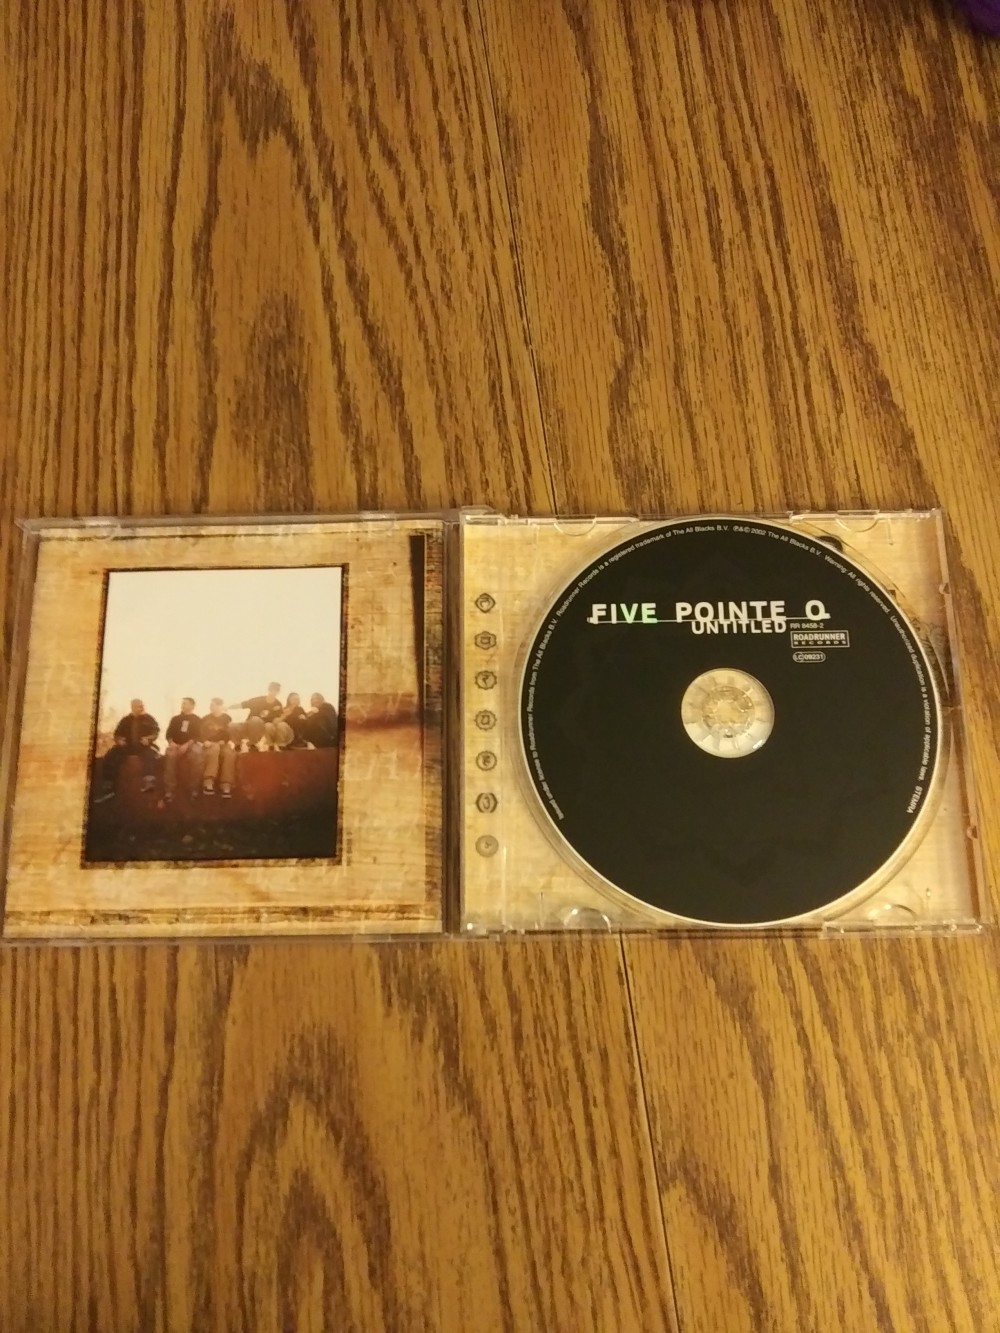 Five Pointe O - Untitled CD Photo | Metal Kingdom